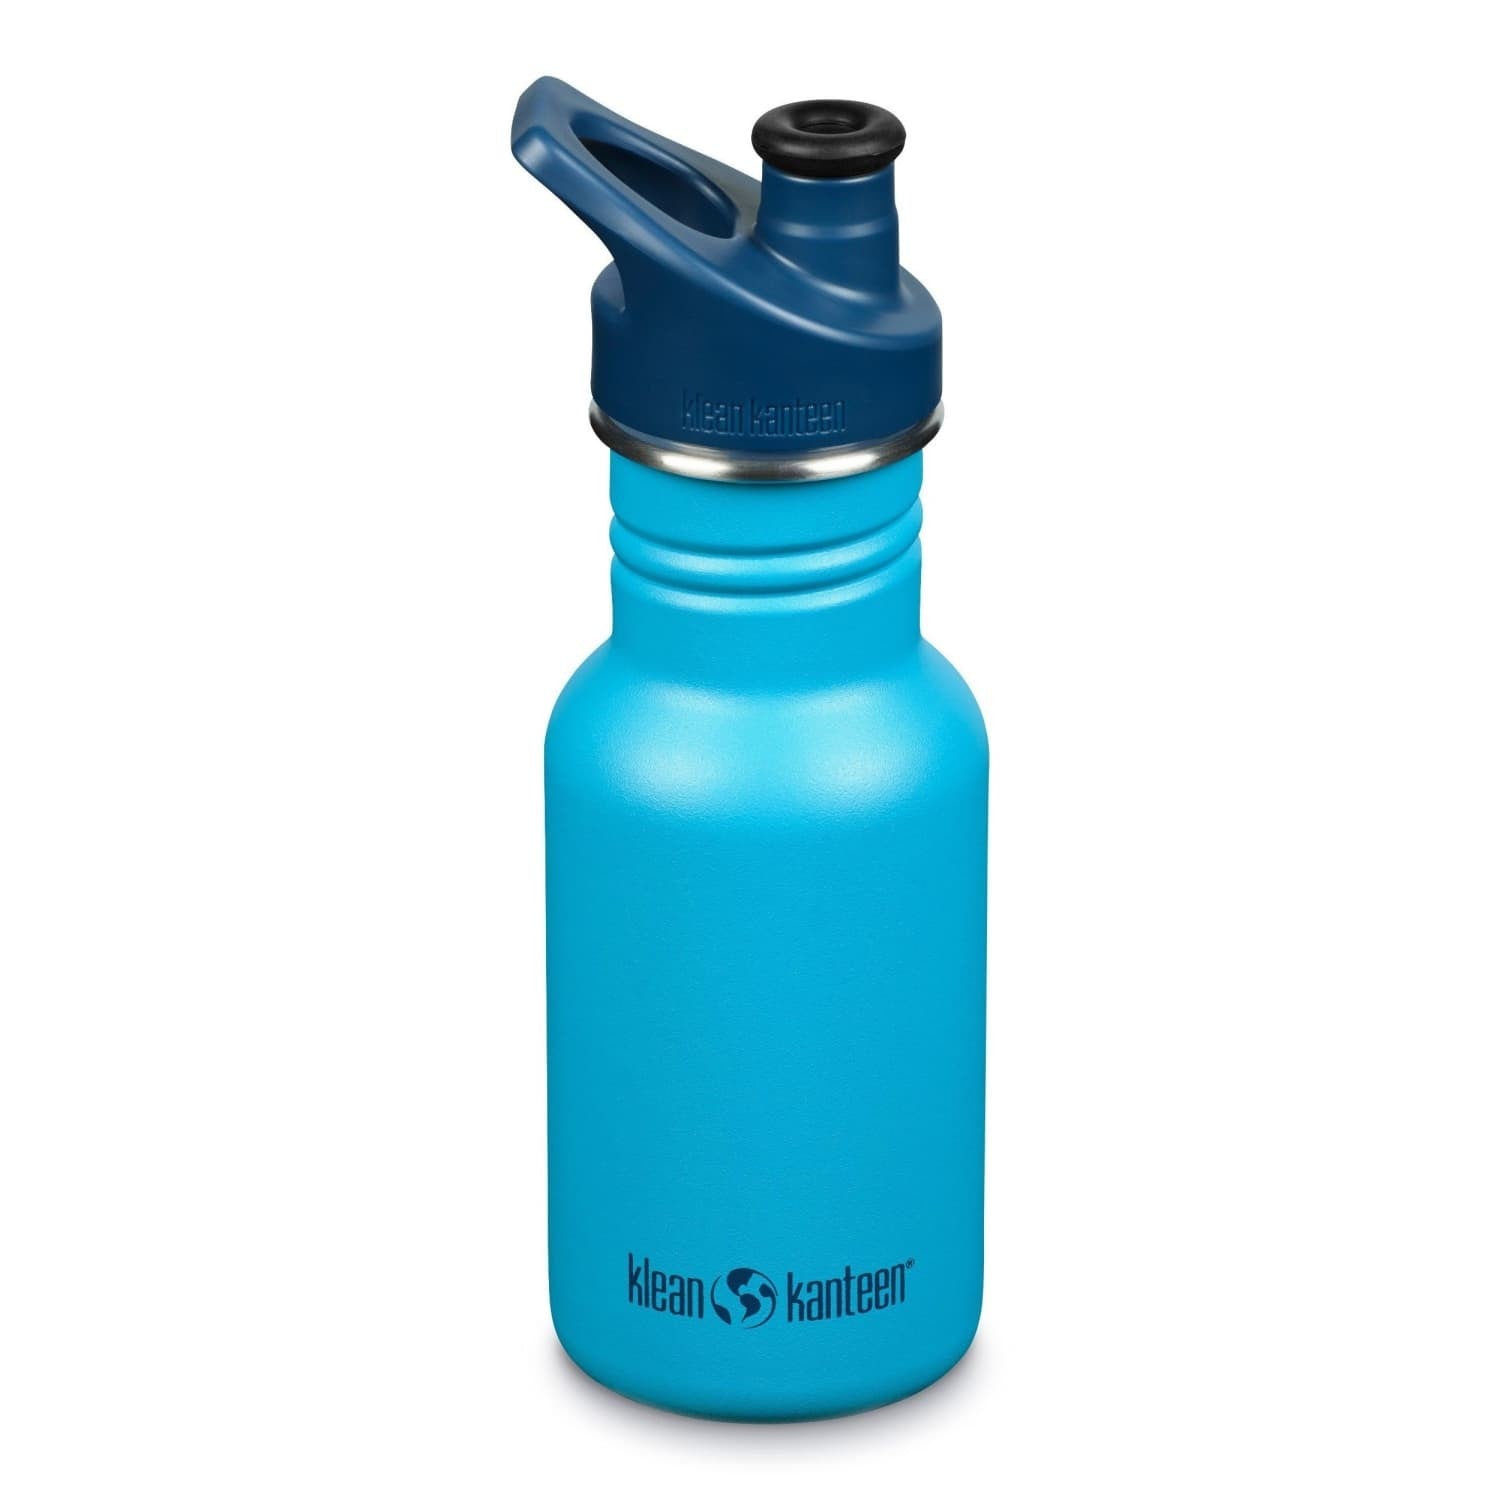 Klean kanteen kids reusable stainless steel water bottle Hawaiian ocean blue